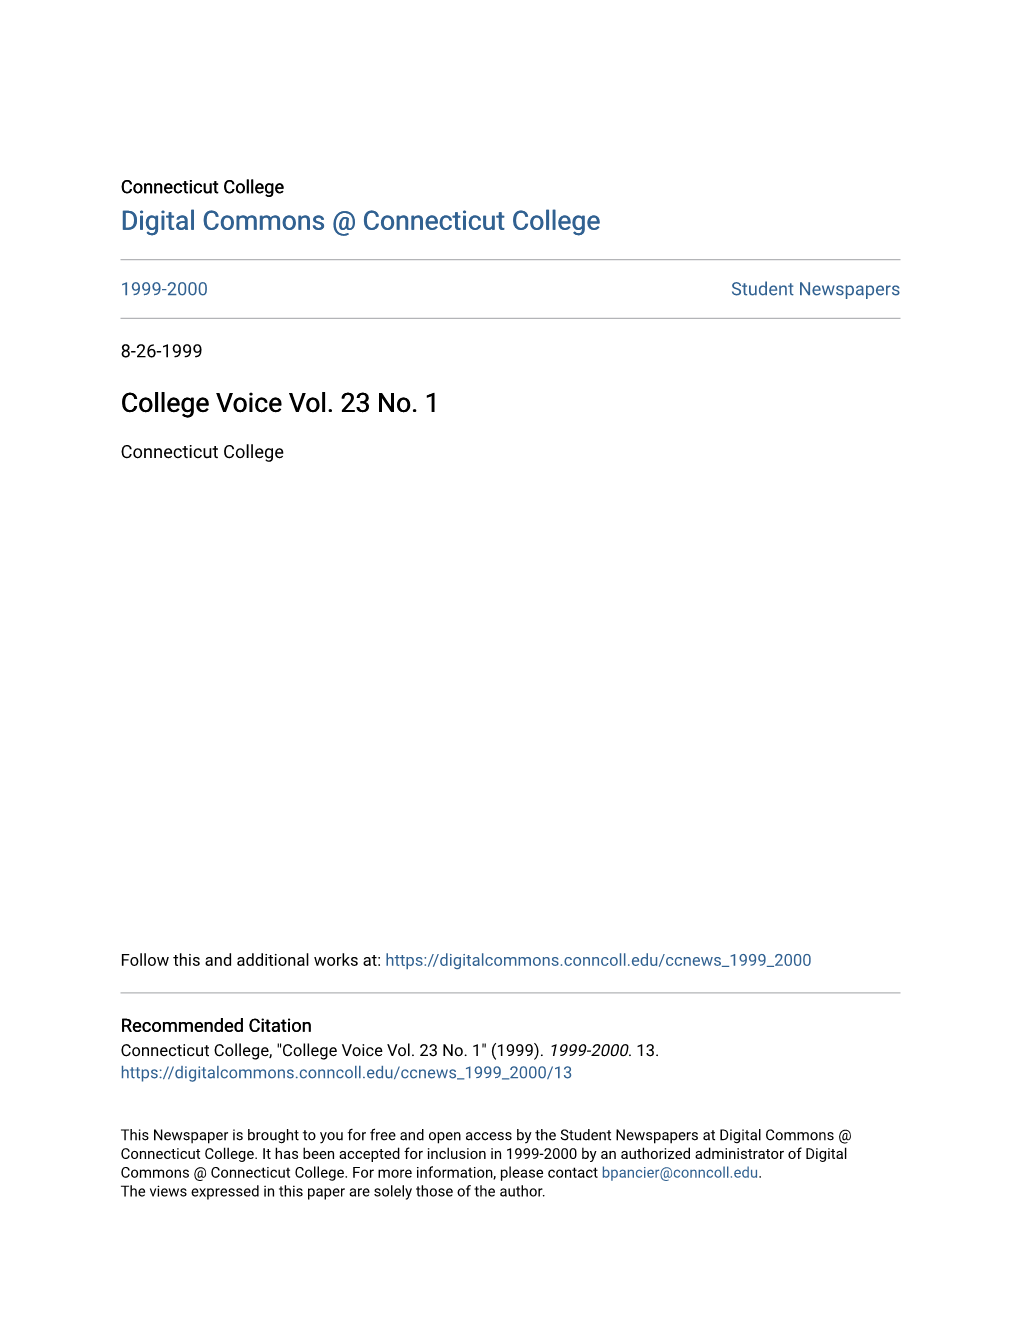 College Voice Vol. 23 No. 1